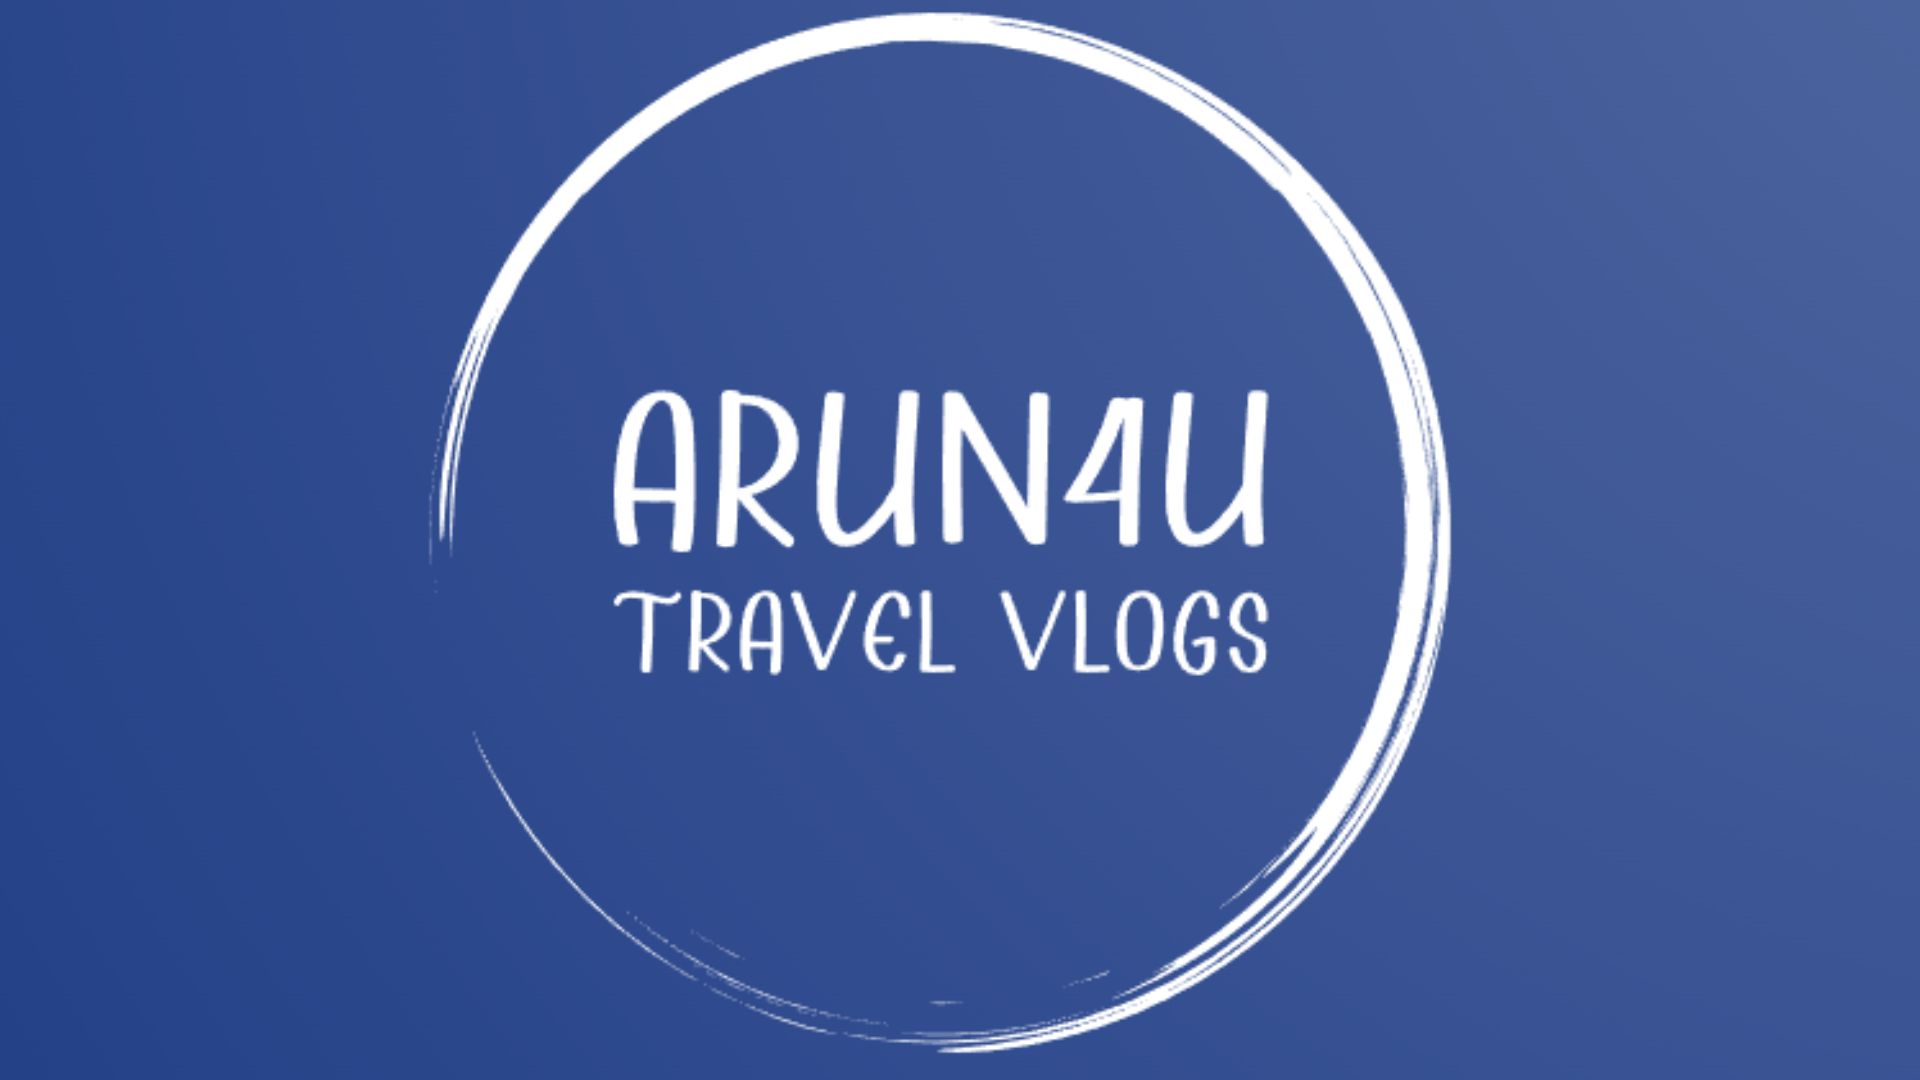 Arun4u Travel Vlog